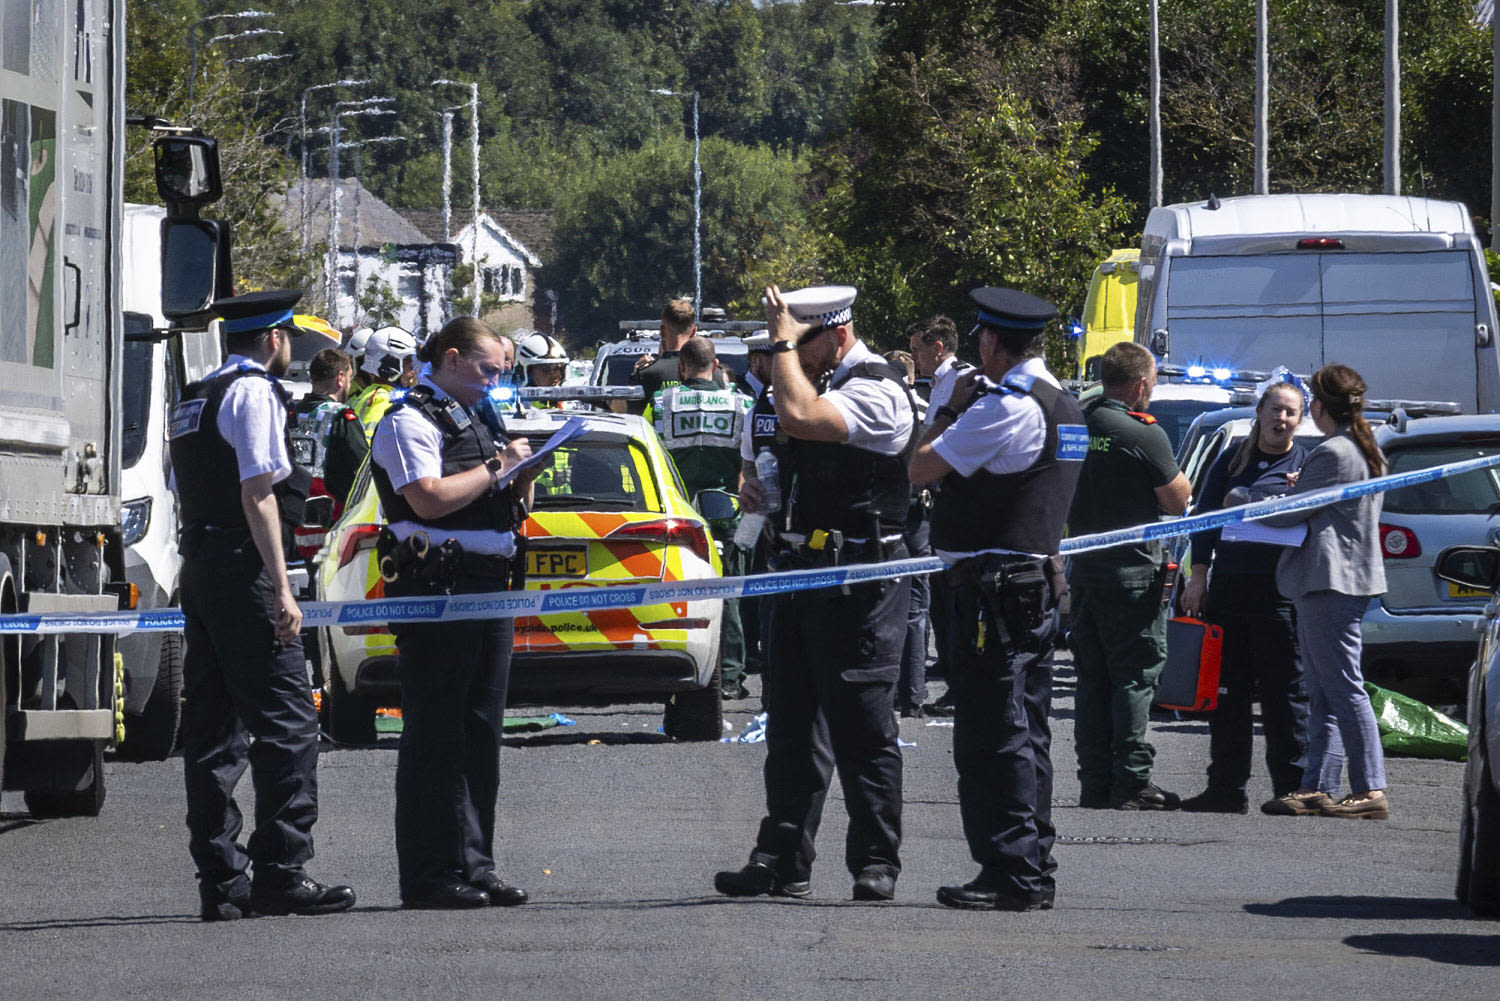 2 children dead, 9 others injured in stabbing attack in U.K.